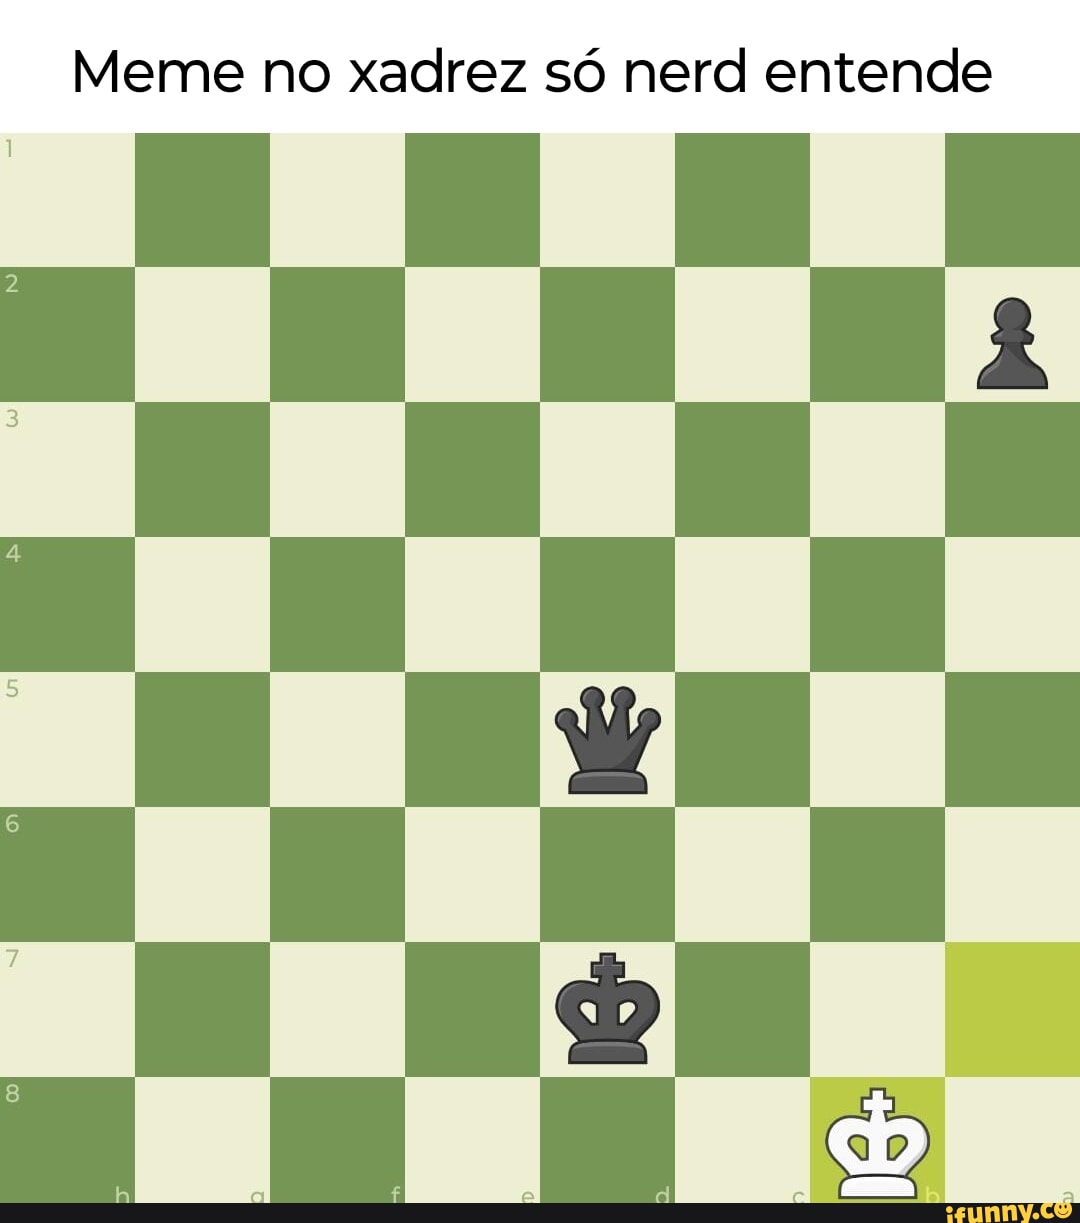 Meme no xadrez só nerd entende - iFunny Brazil